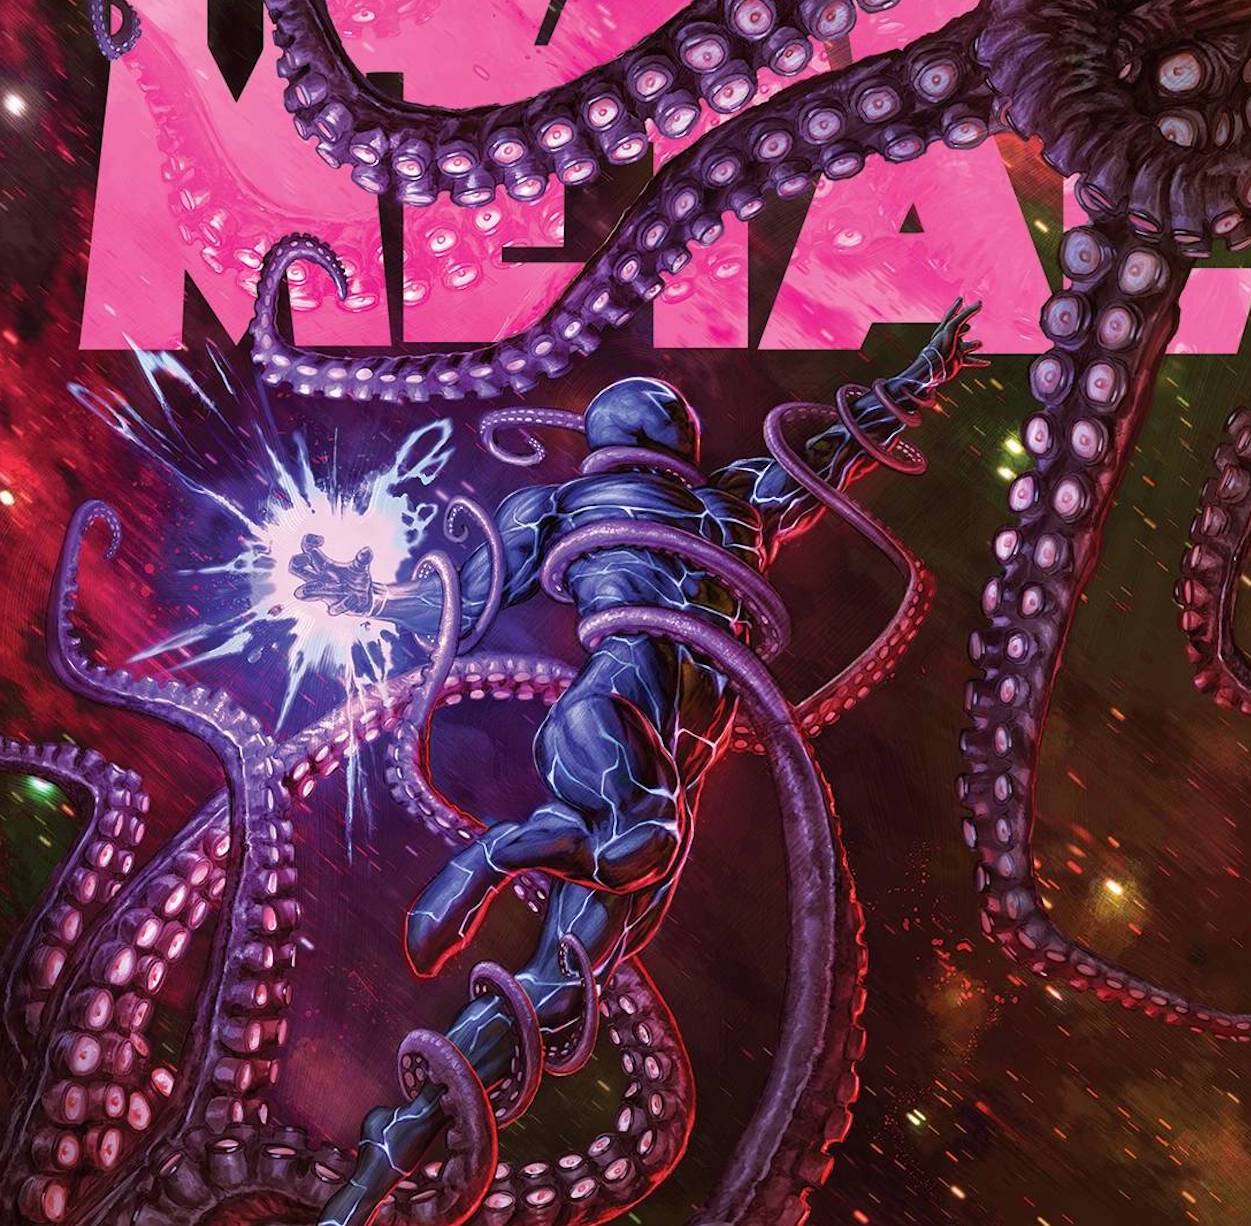 EXCLUSIVE Heavy Metal Preview: Dark Wing Book 1 Finale (Heavy Metal Magazine #319)